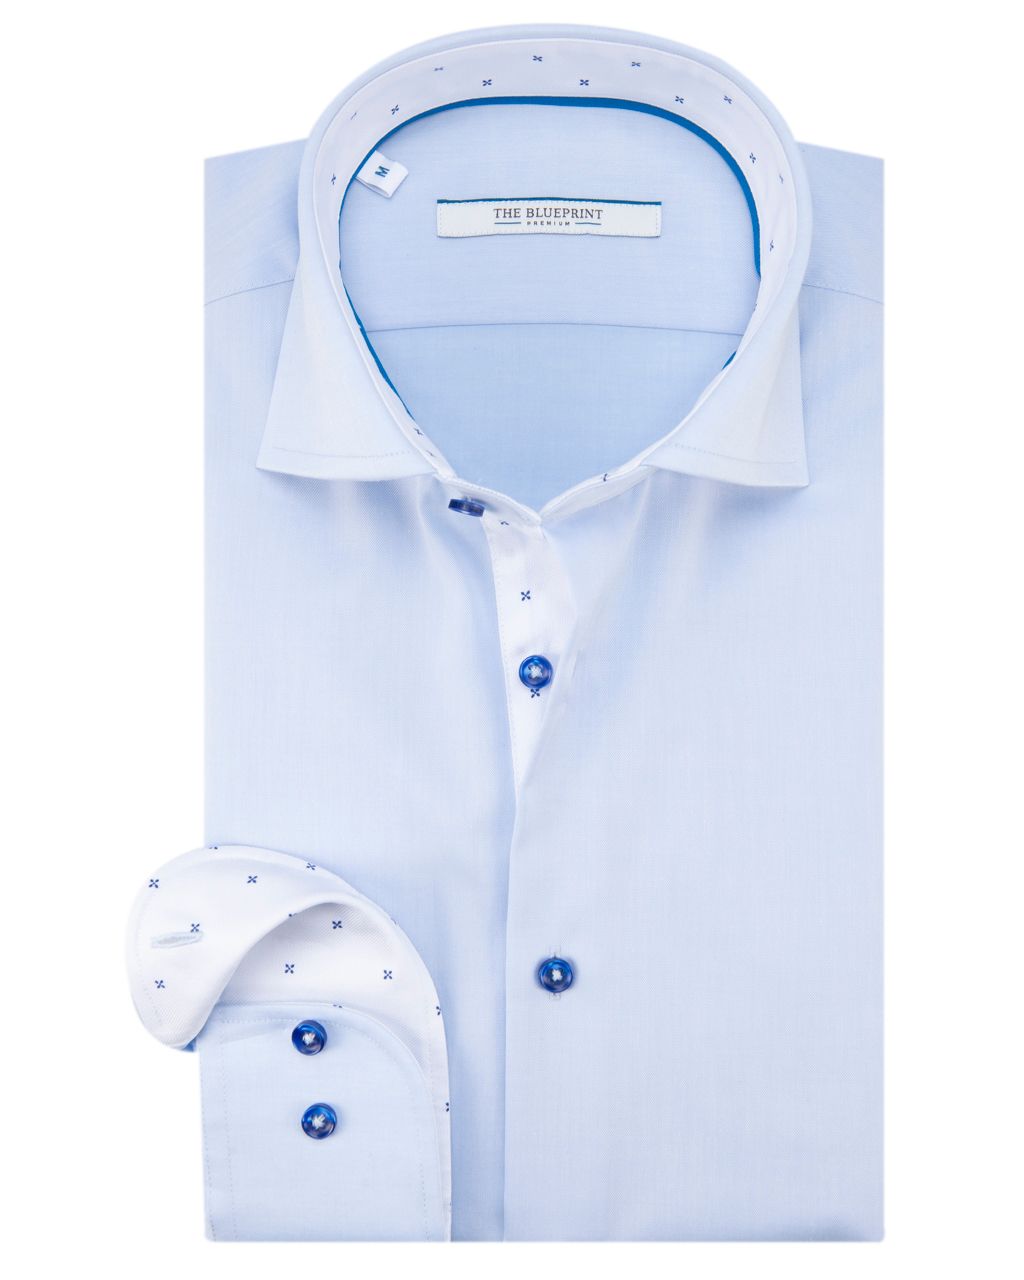 The BLUEPRINT Premium Trendy overhemd LM Lichtblauw uni 053721-001-L